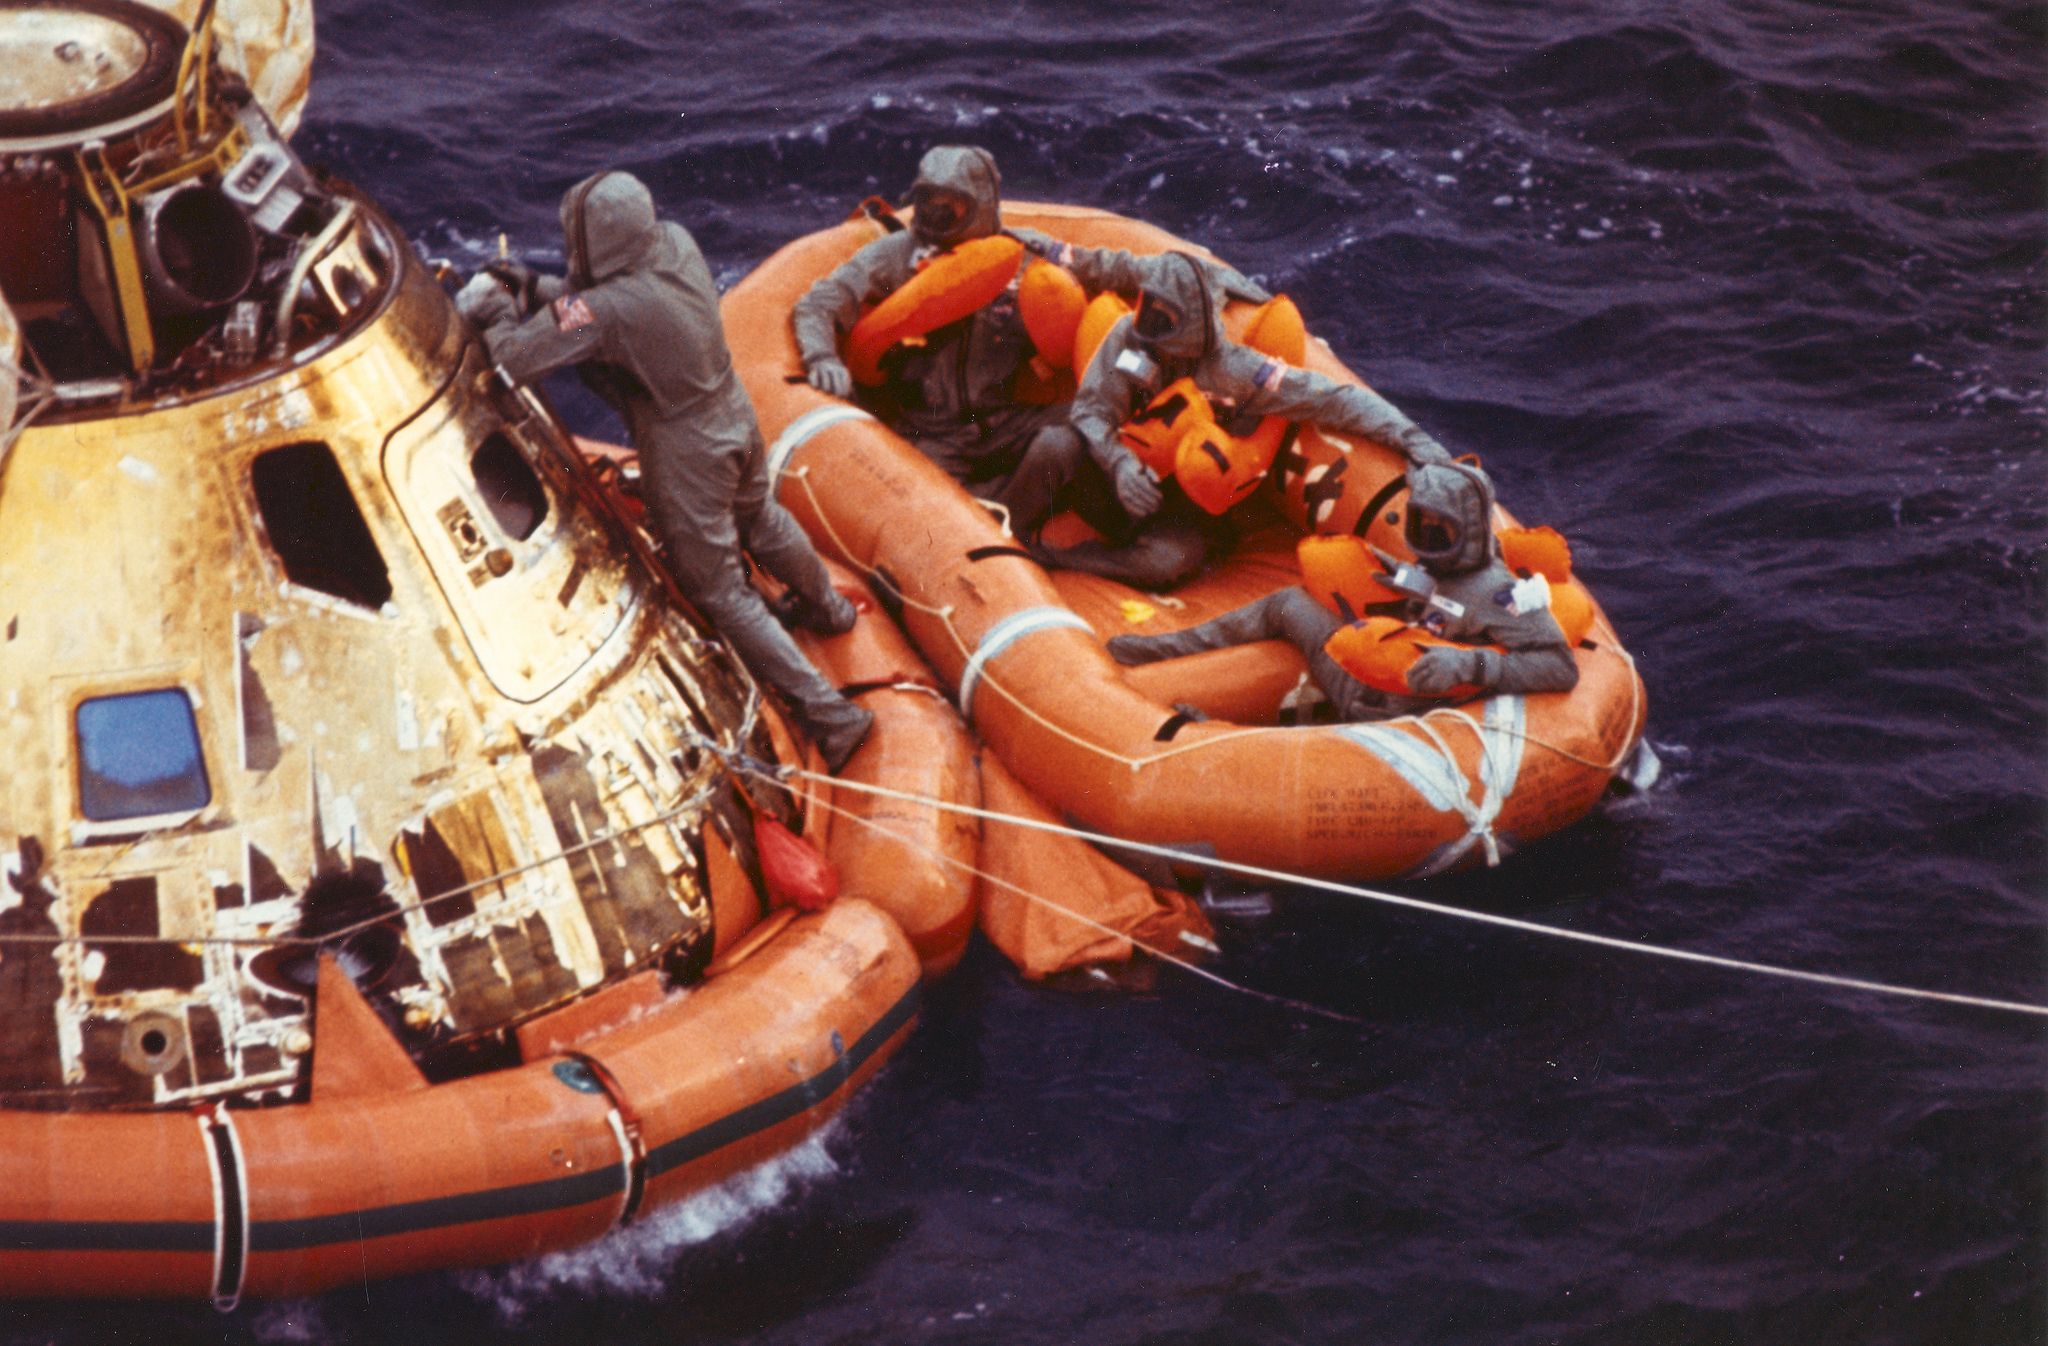 Apollo 11 Recovery